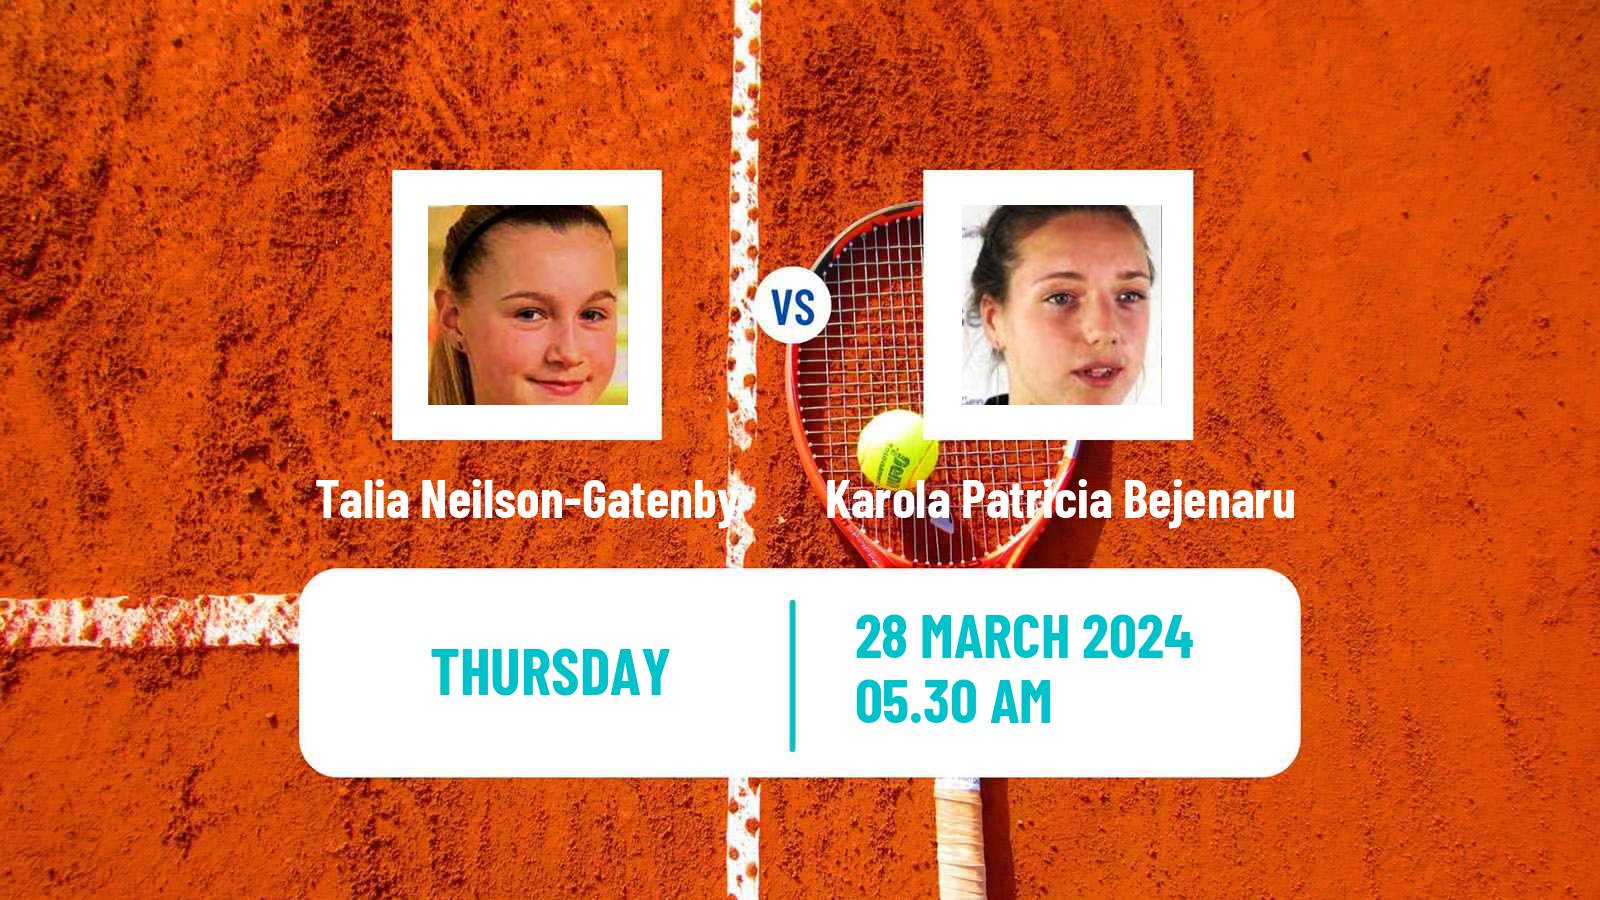 Tennis ITF W15 Sharm Elsheikh 8 Women Talia Neilson-Gatenby - Karola Patricia Bejenaru